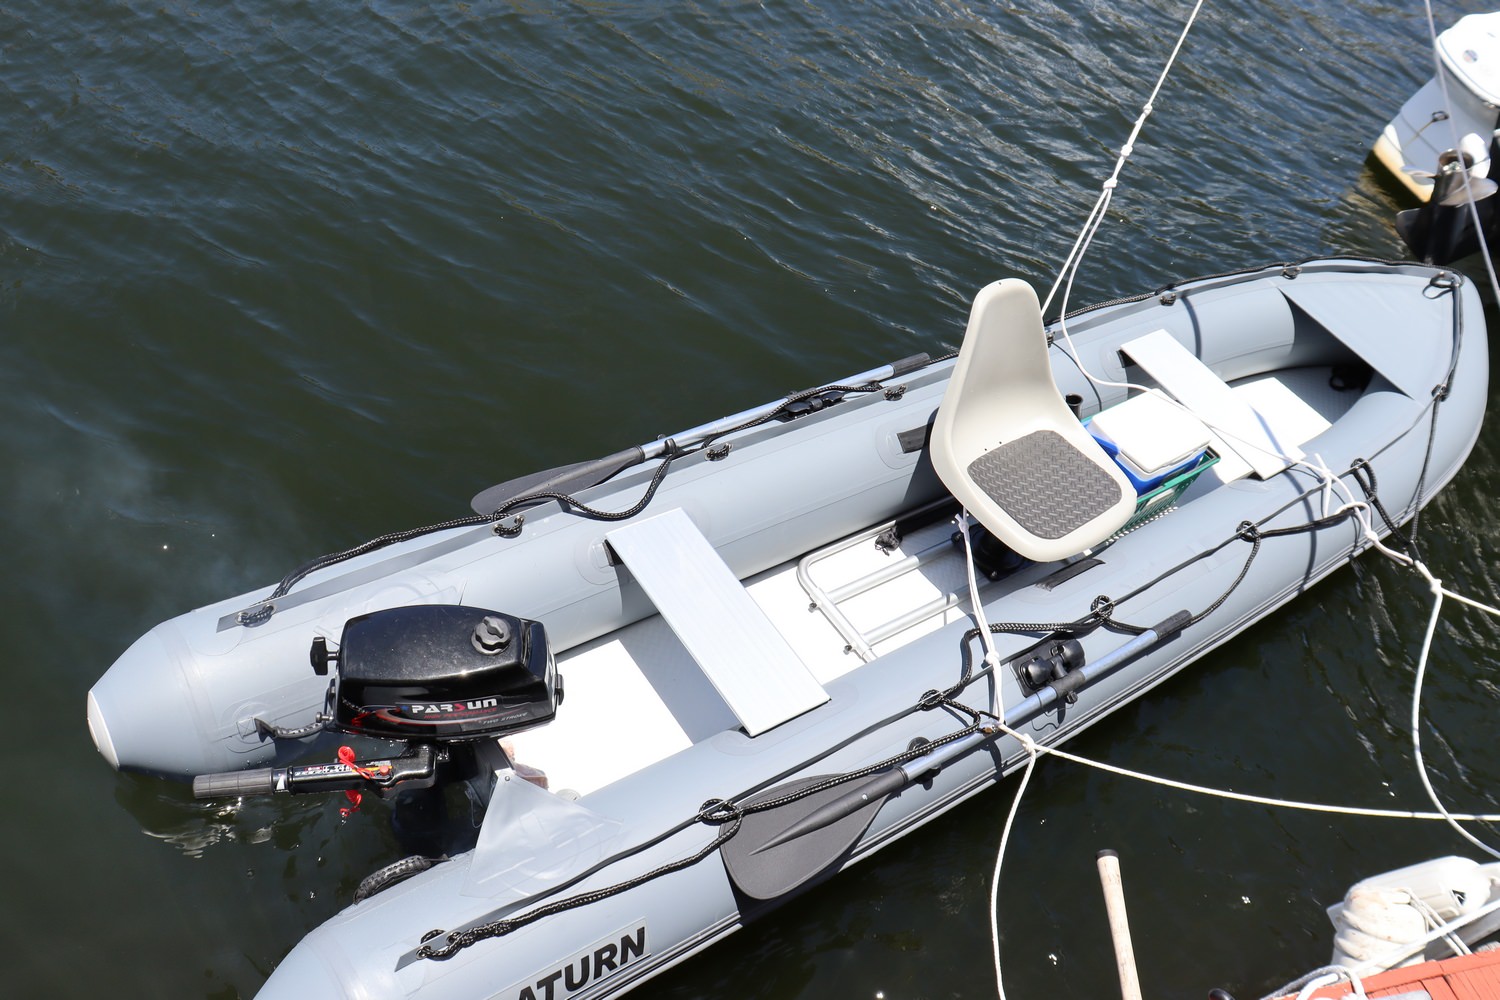 Aluminum Adjustable Seating Platform for inflatable boats, KaBoats, kayaks